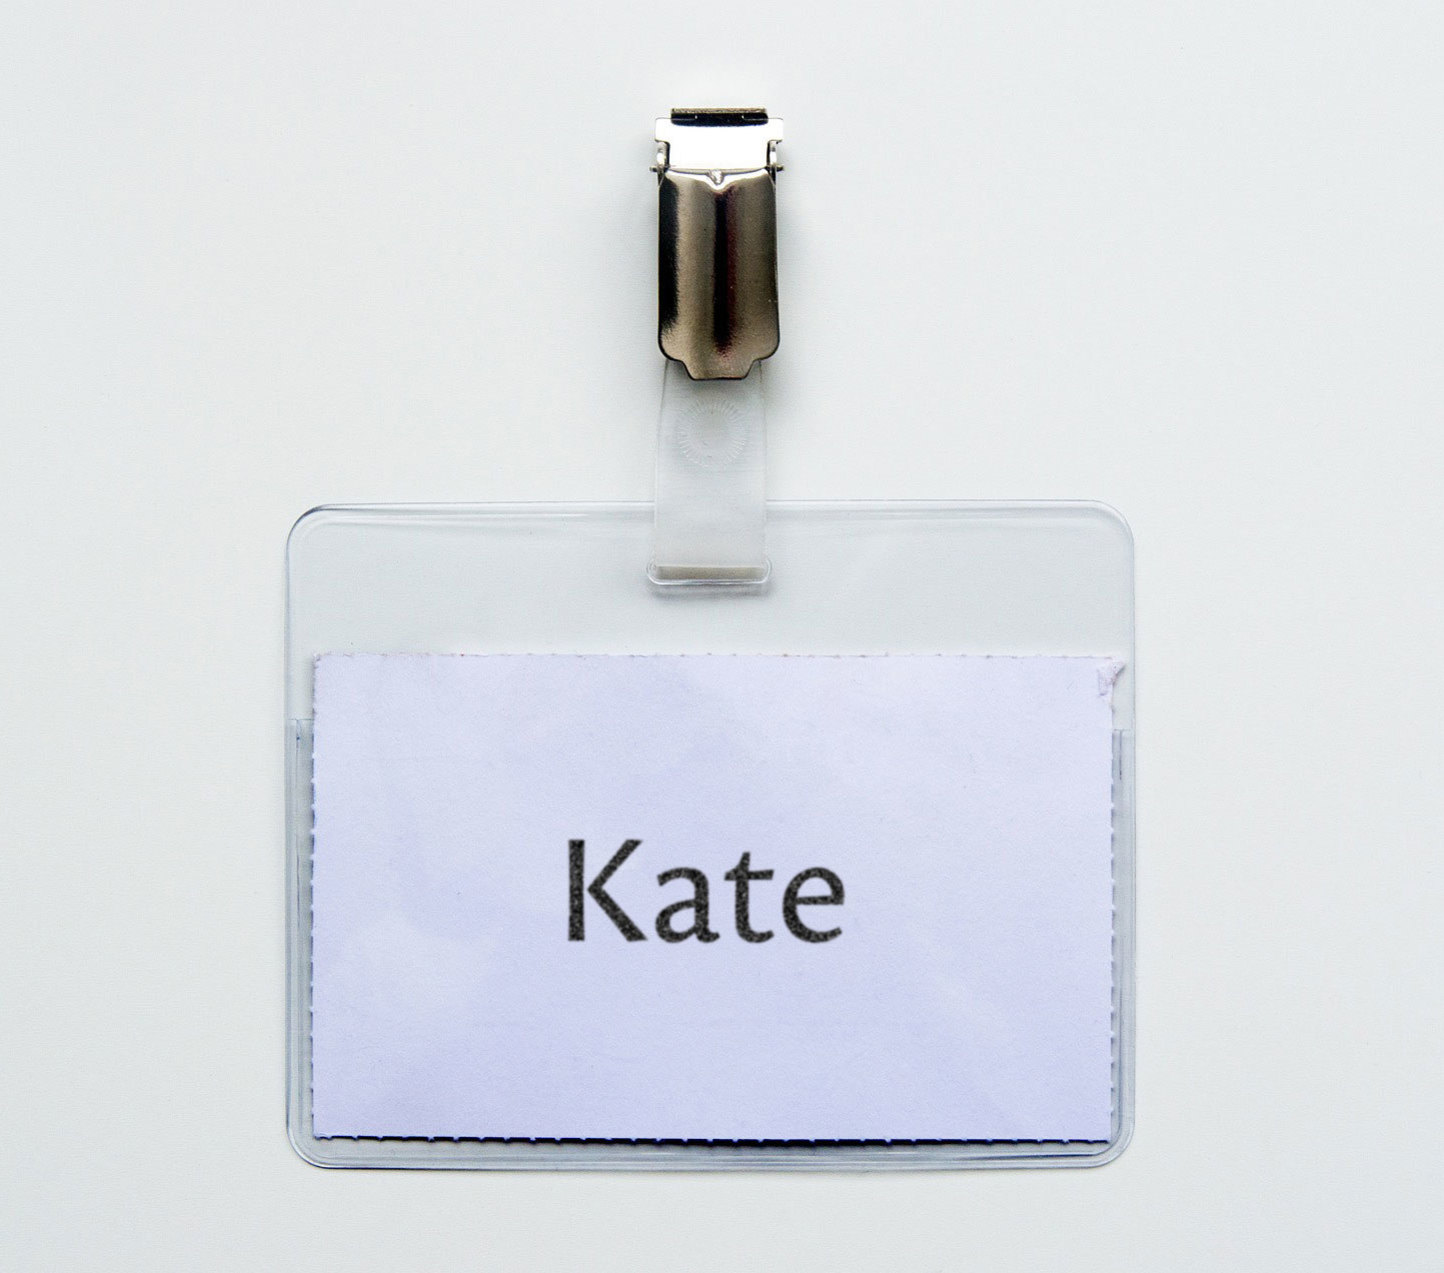 Kate name badge